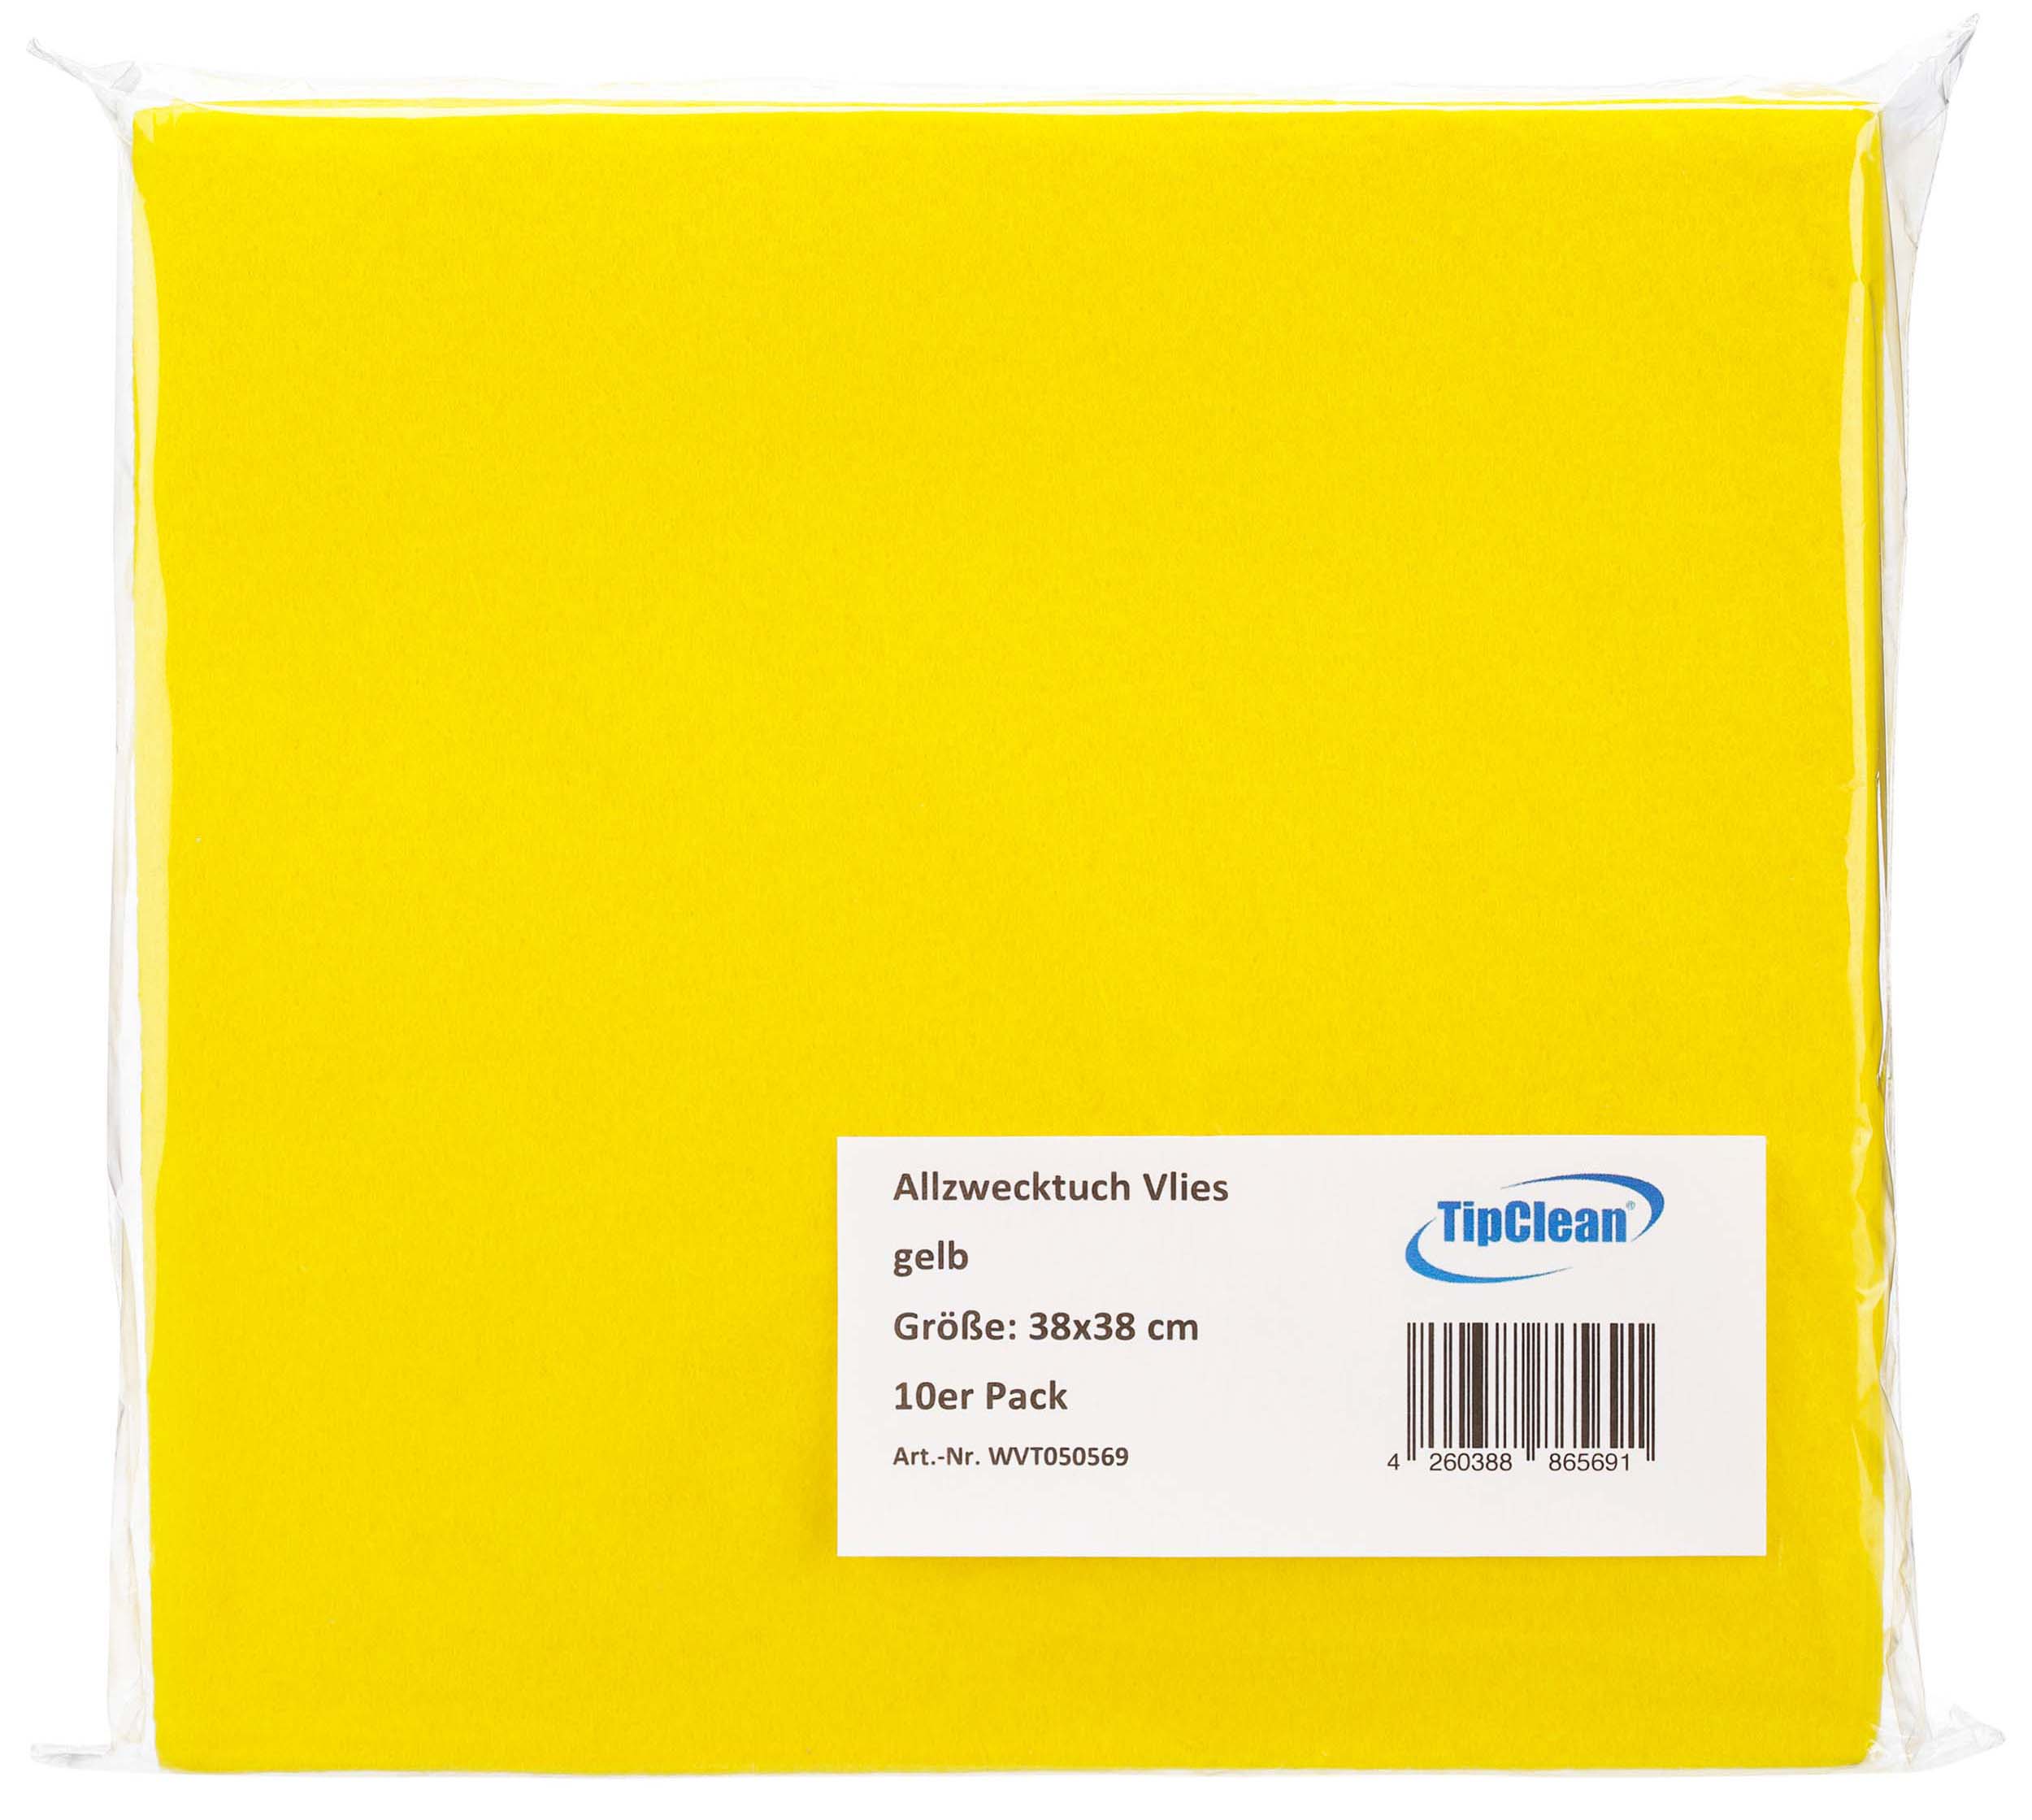 TipClean Allzwecktuch Vlies gelb 38 x 38 cm - 10er Pack